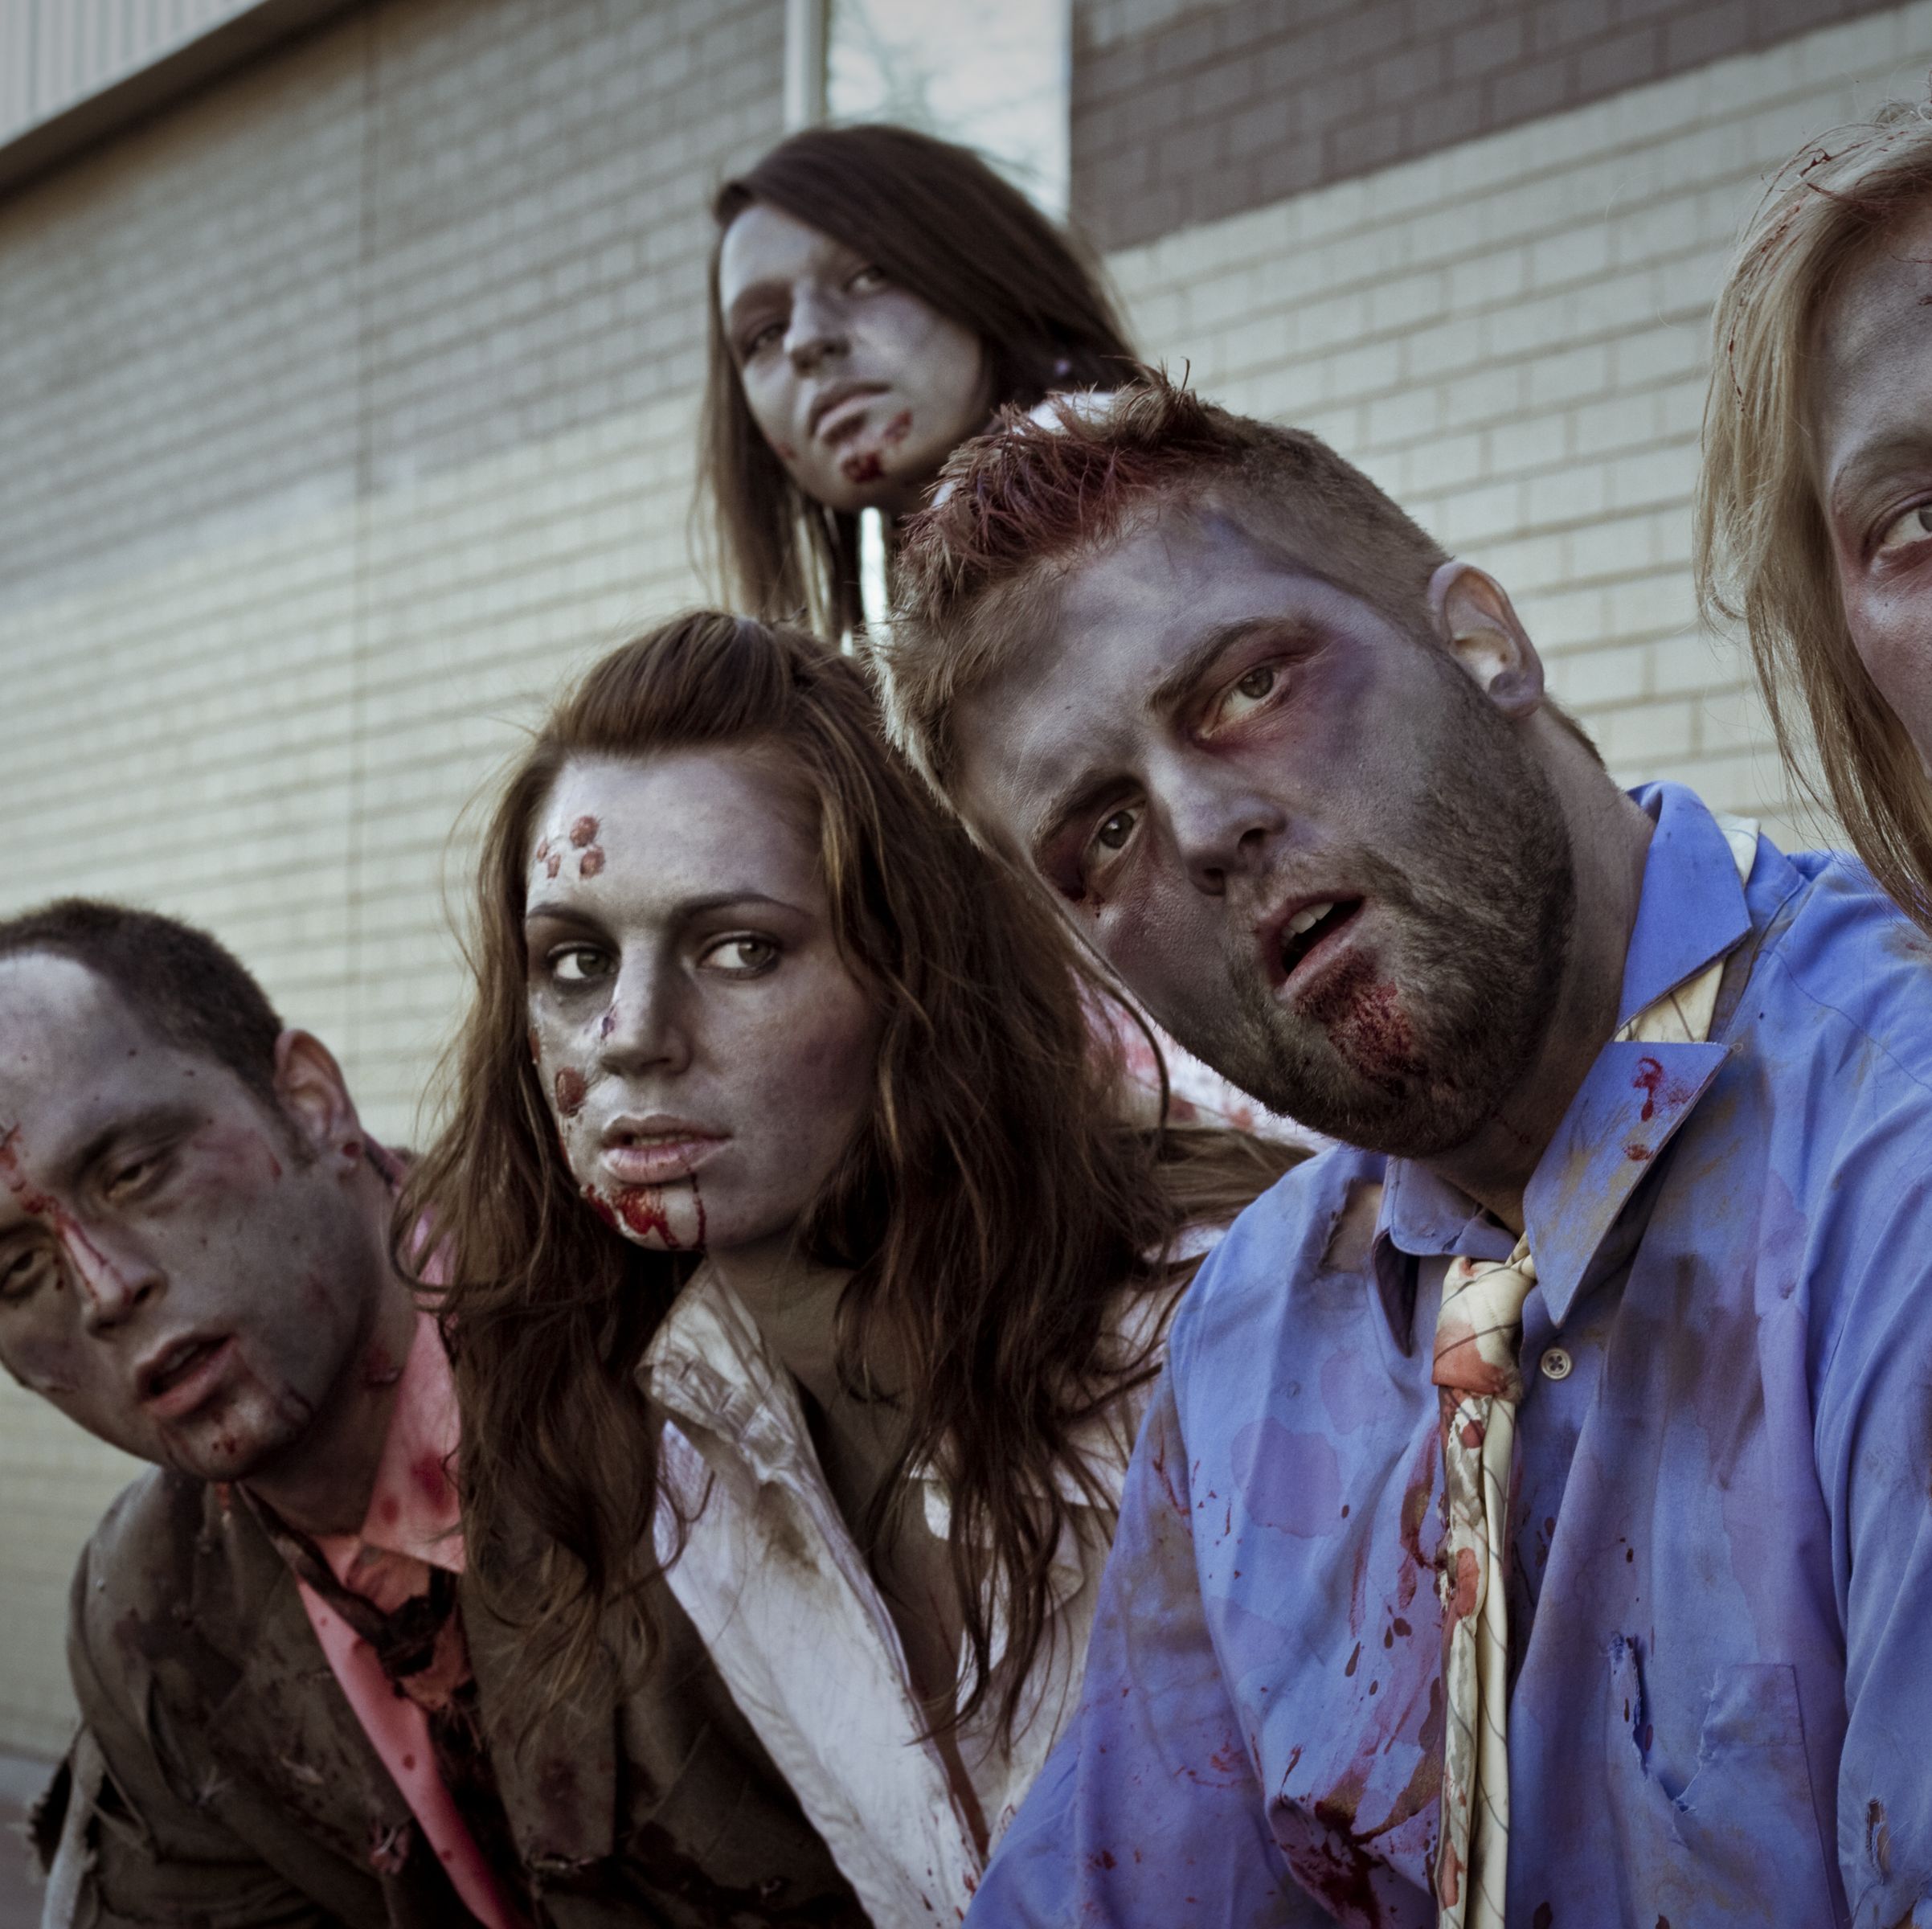 kids zombie costume